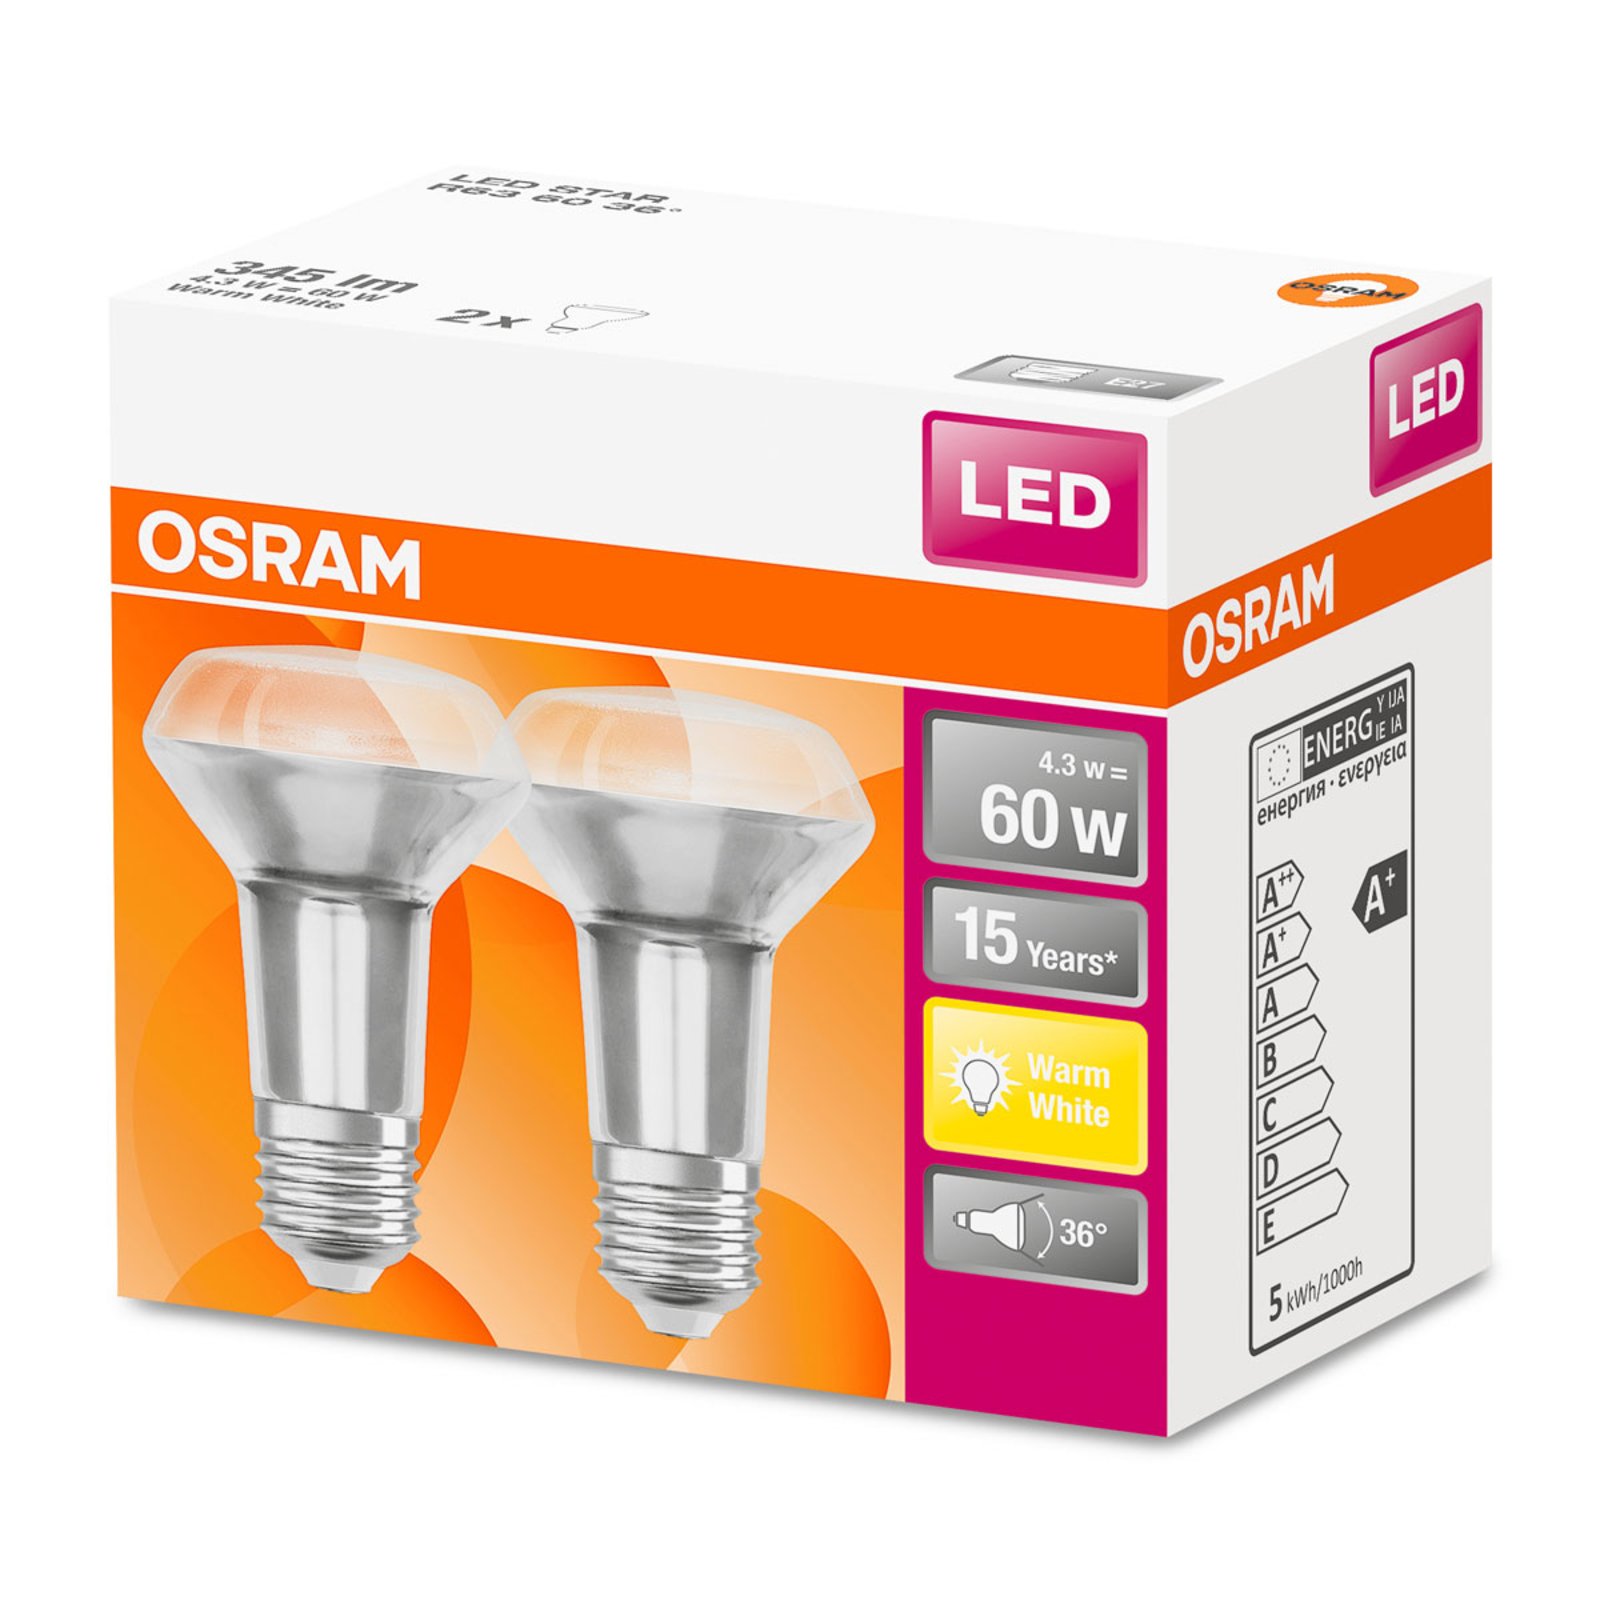 Arbeid Rijke man segment OSRAM LED reflector E27 R63 4,3W 2.700K 36° per 2 | Lampen24.nl